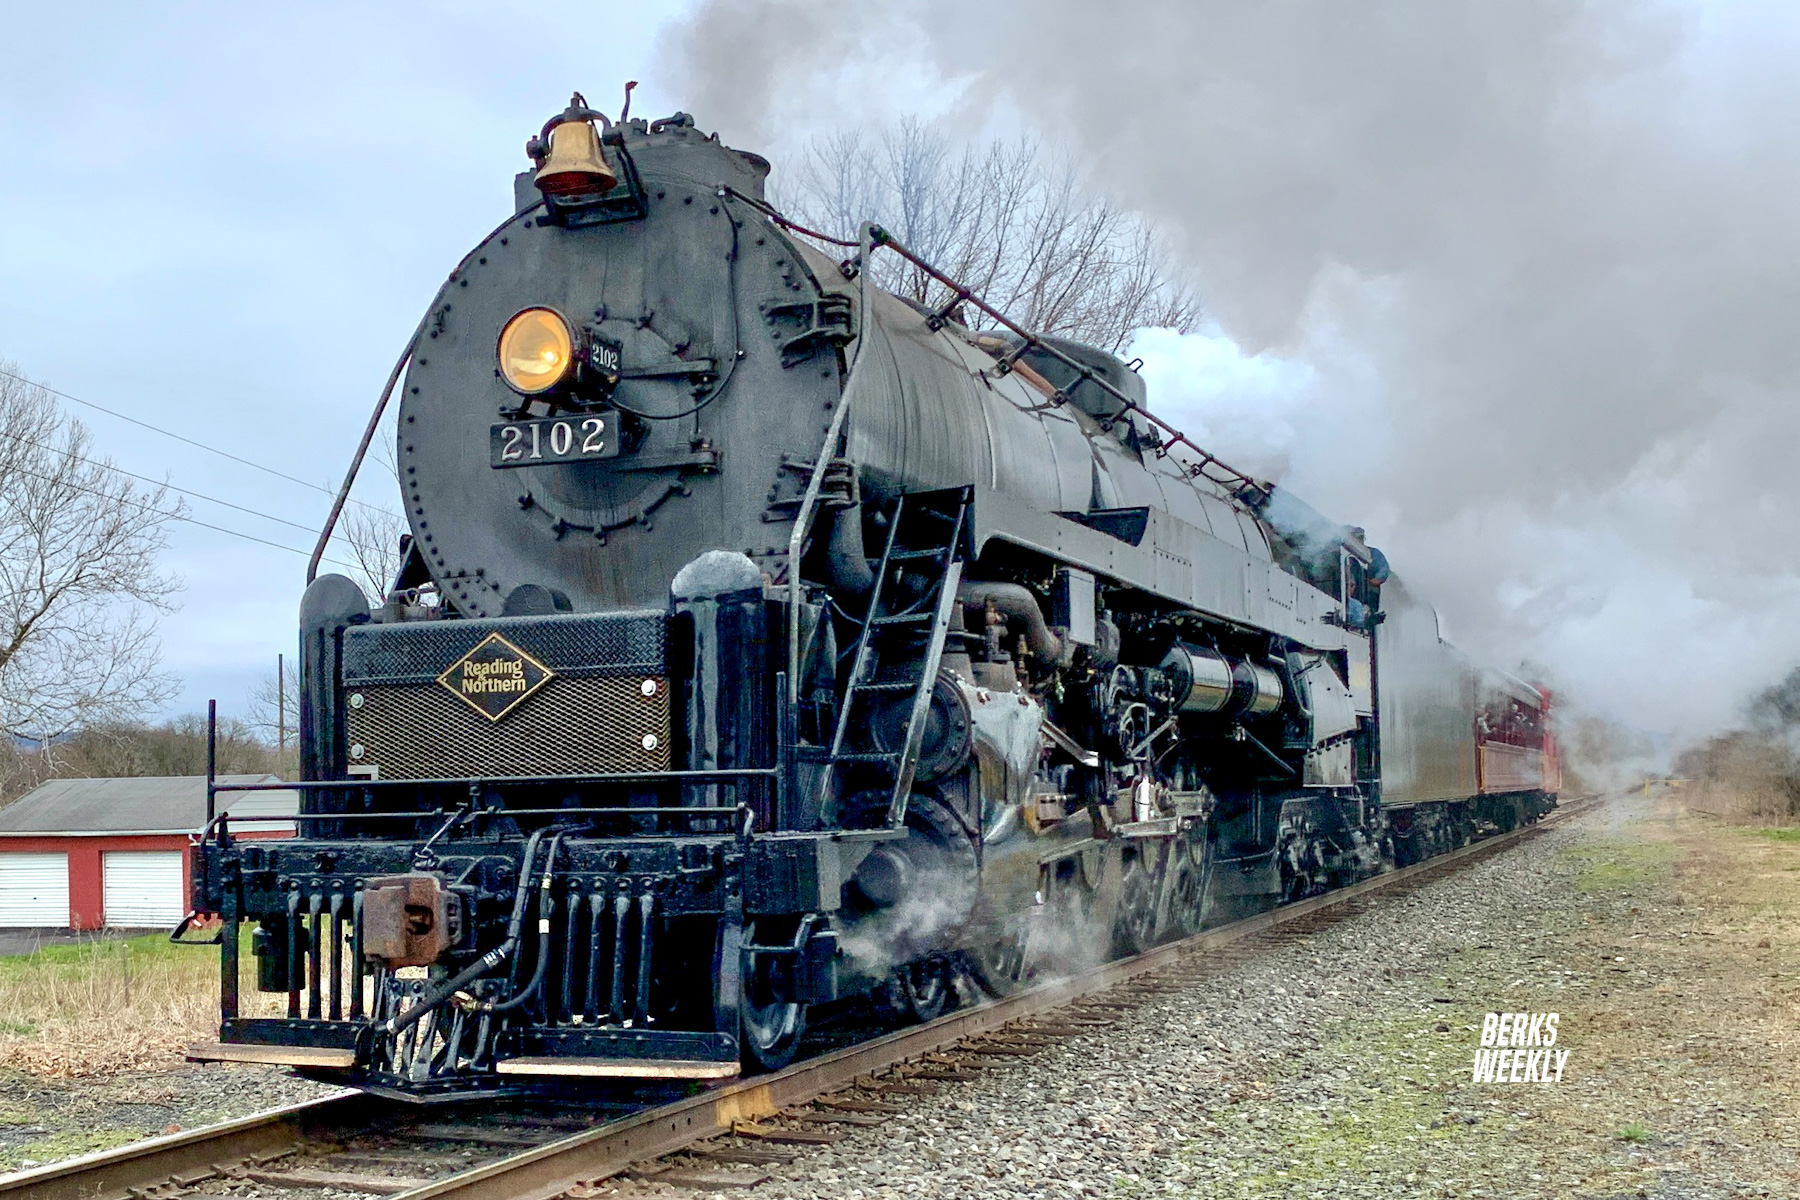 Reading & Northern Railroad reintroduces historic steam 2102